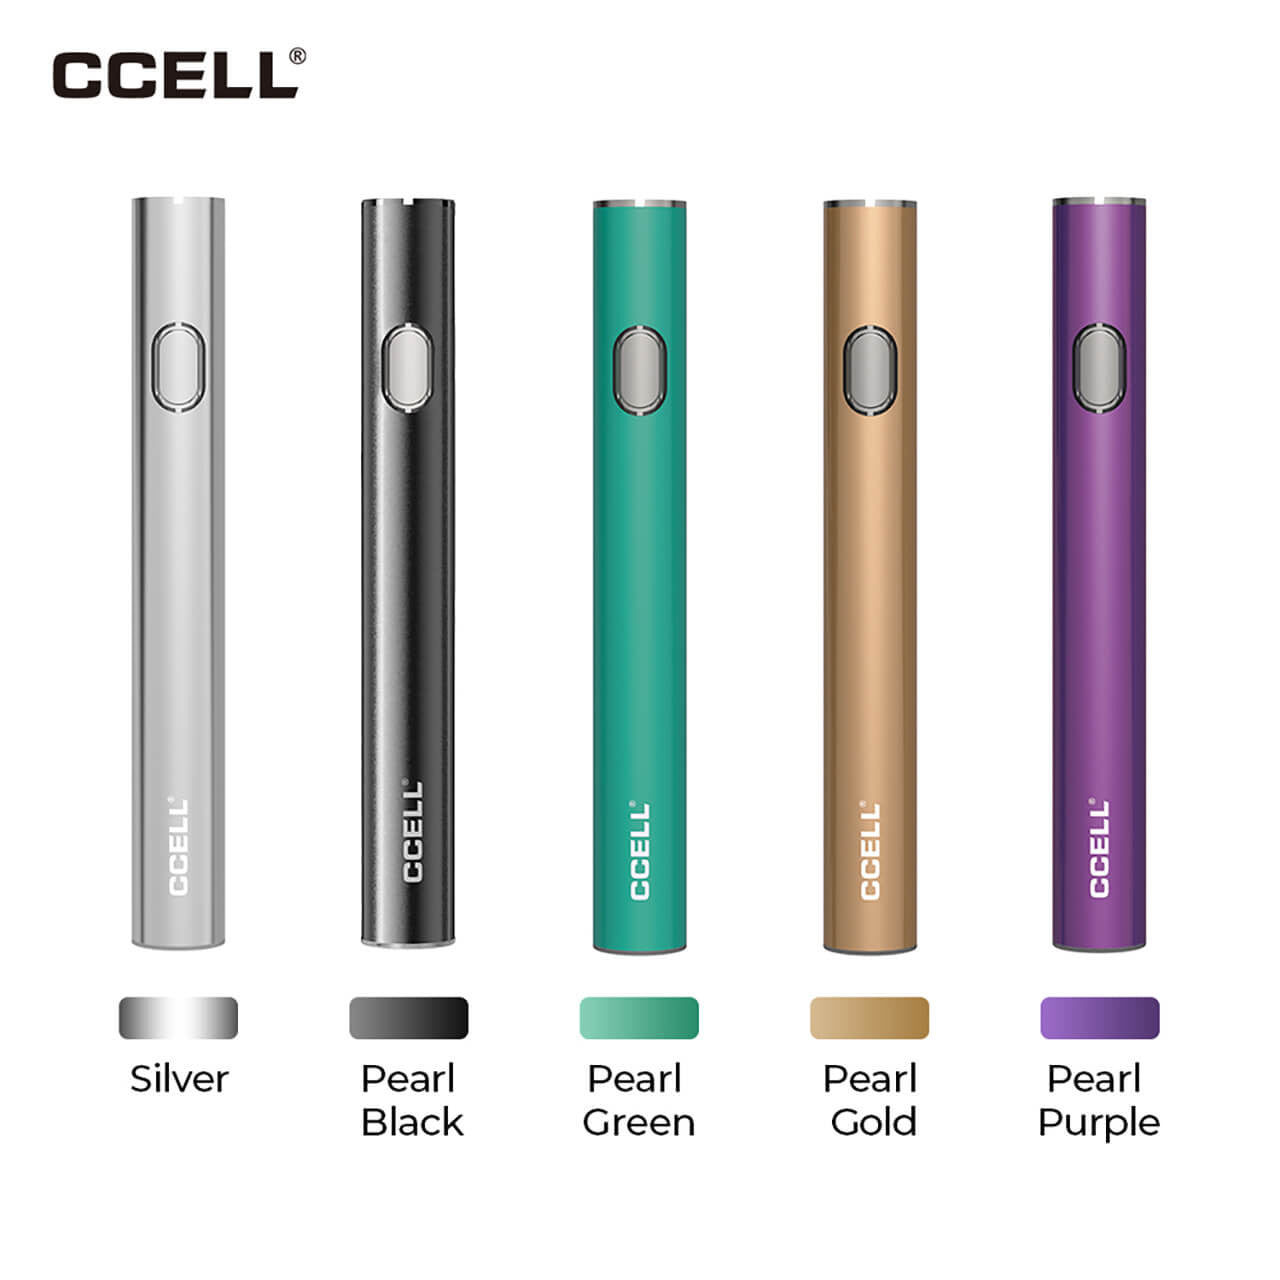 CCELL M3B Battery Best Sales Price - Vape Battery